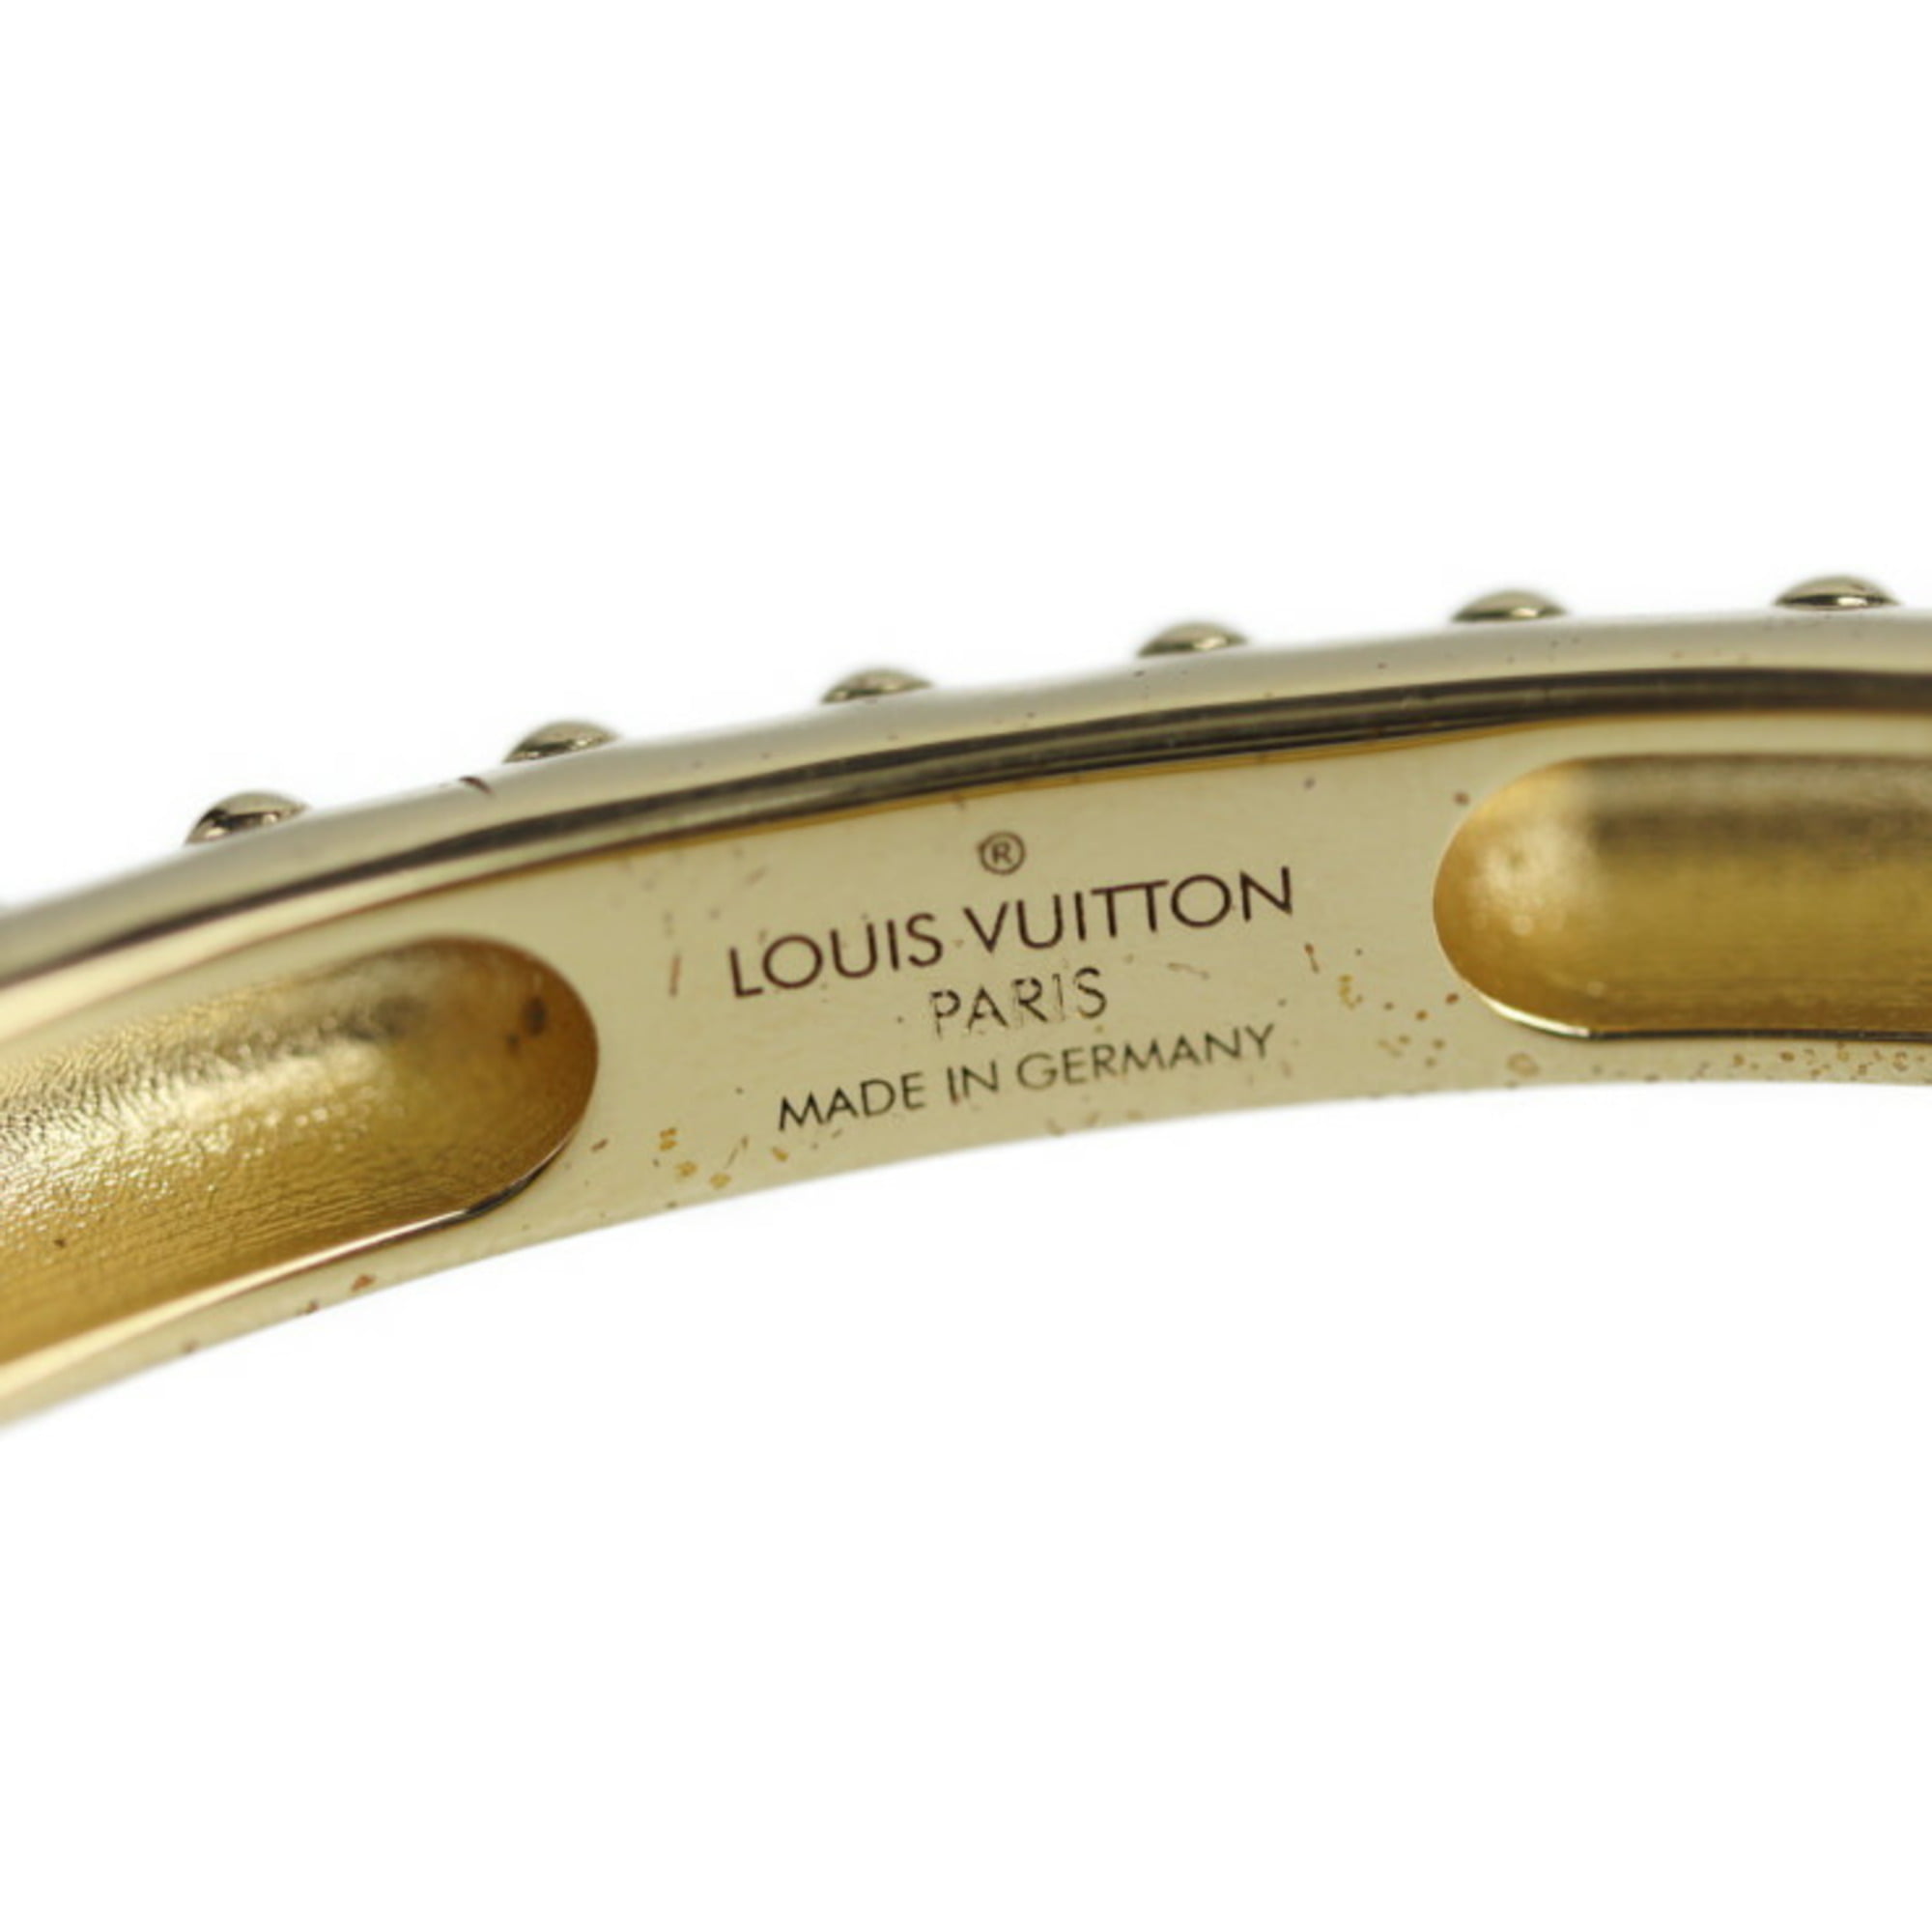 Authenticated Used LOUIS VUITTON Louis Vuitton Brasserie Cellular Bracelet  M92593 Notation Size M Monogram Multicolor Bron Gold Metal Fittings 